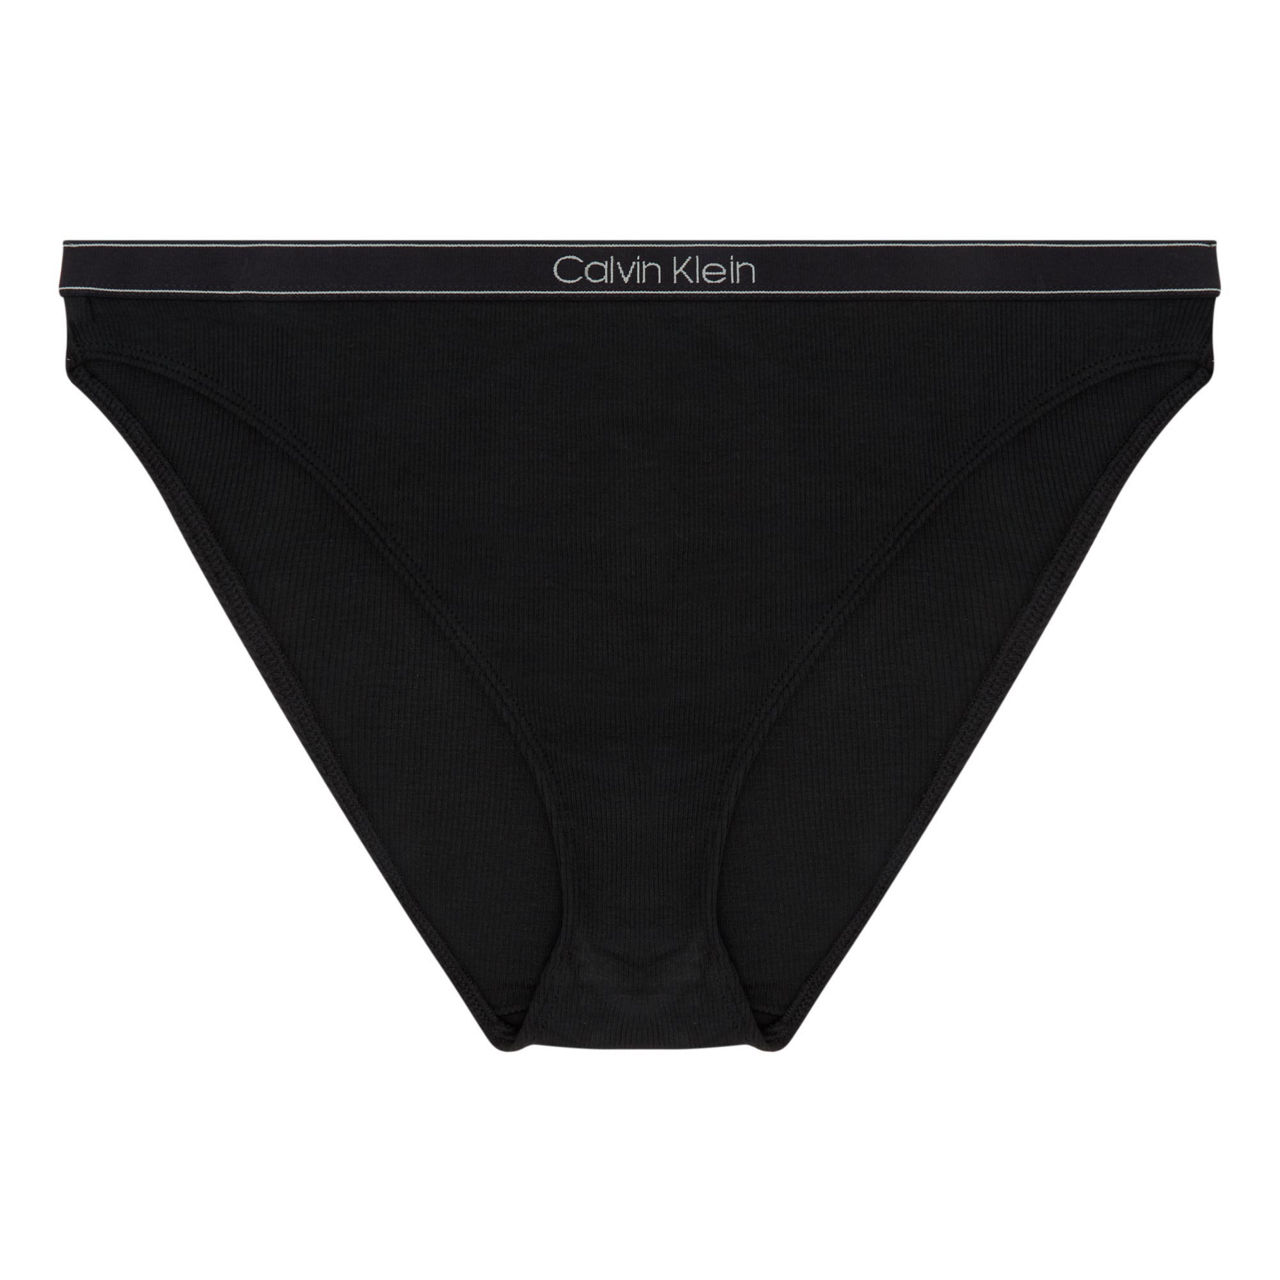 Calvin Klein Women's Pure Ribbed Cheeky Bikini Panty, Black, M at